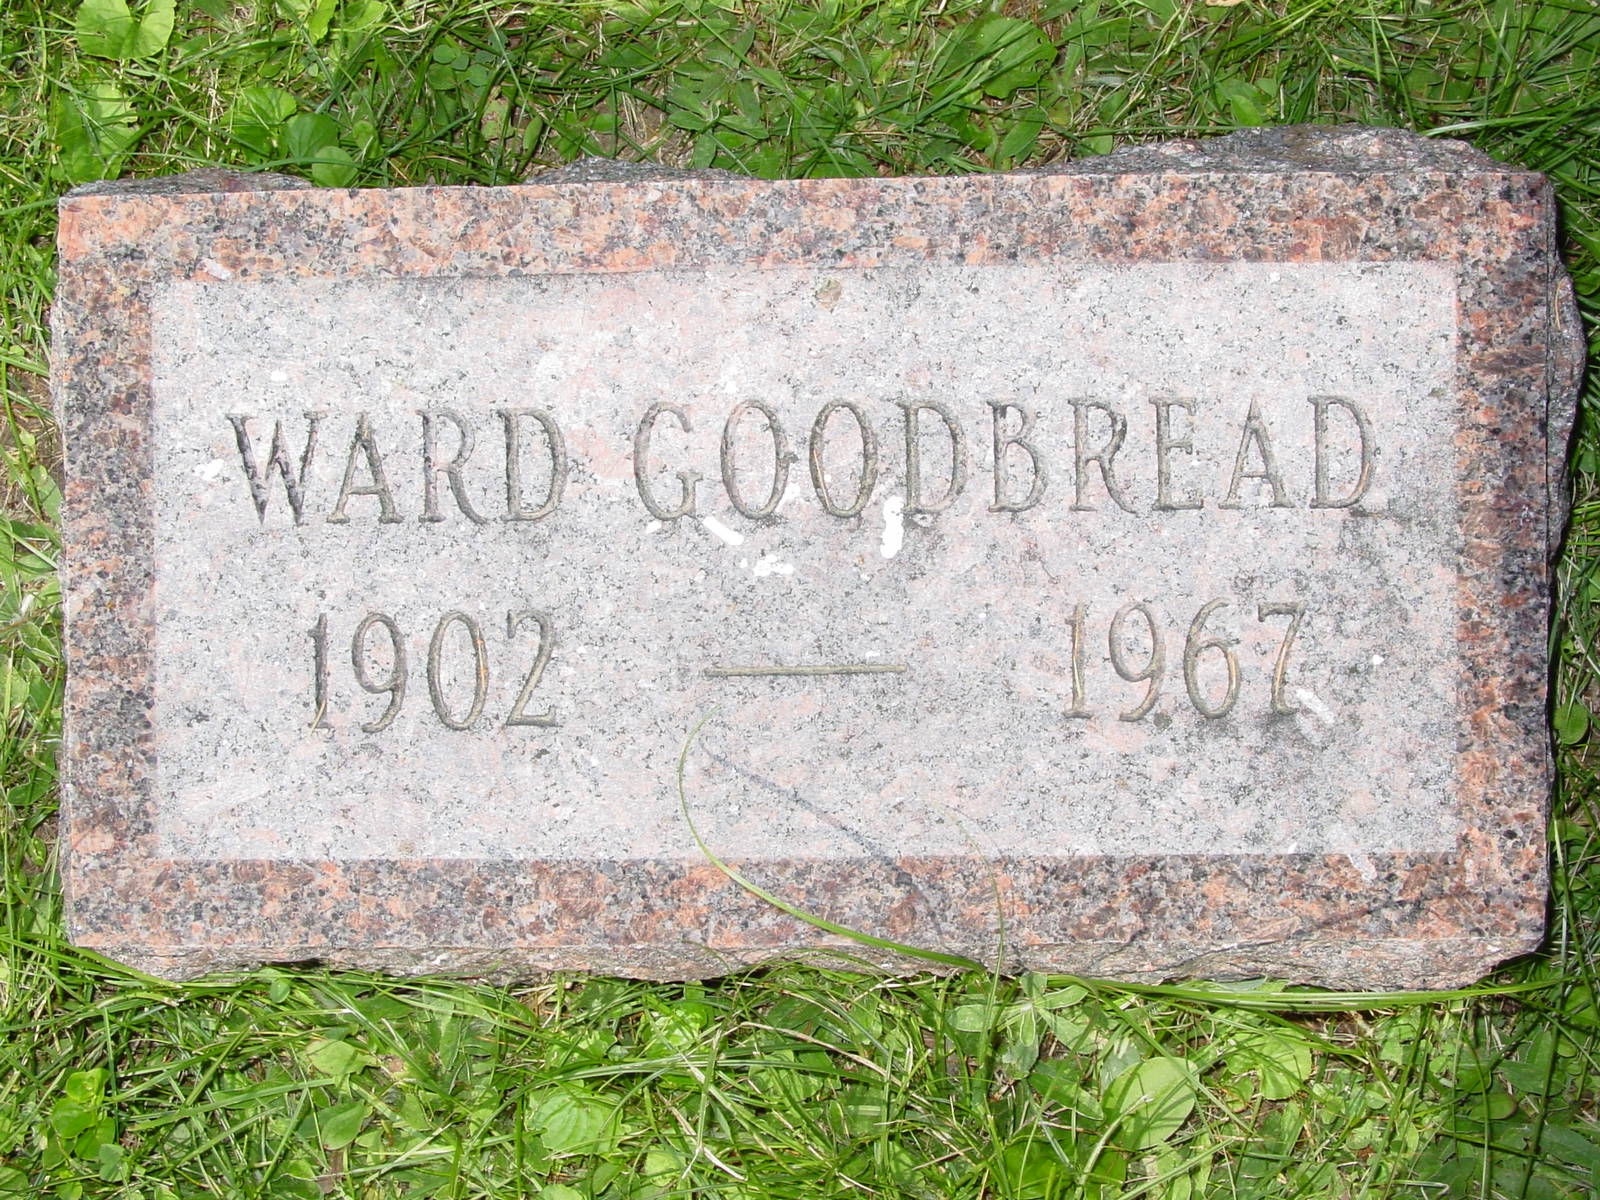 Ward Goodbread gravesite